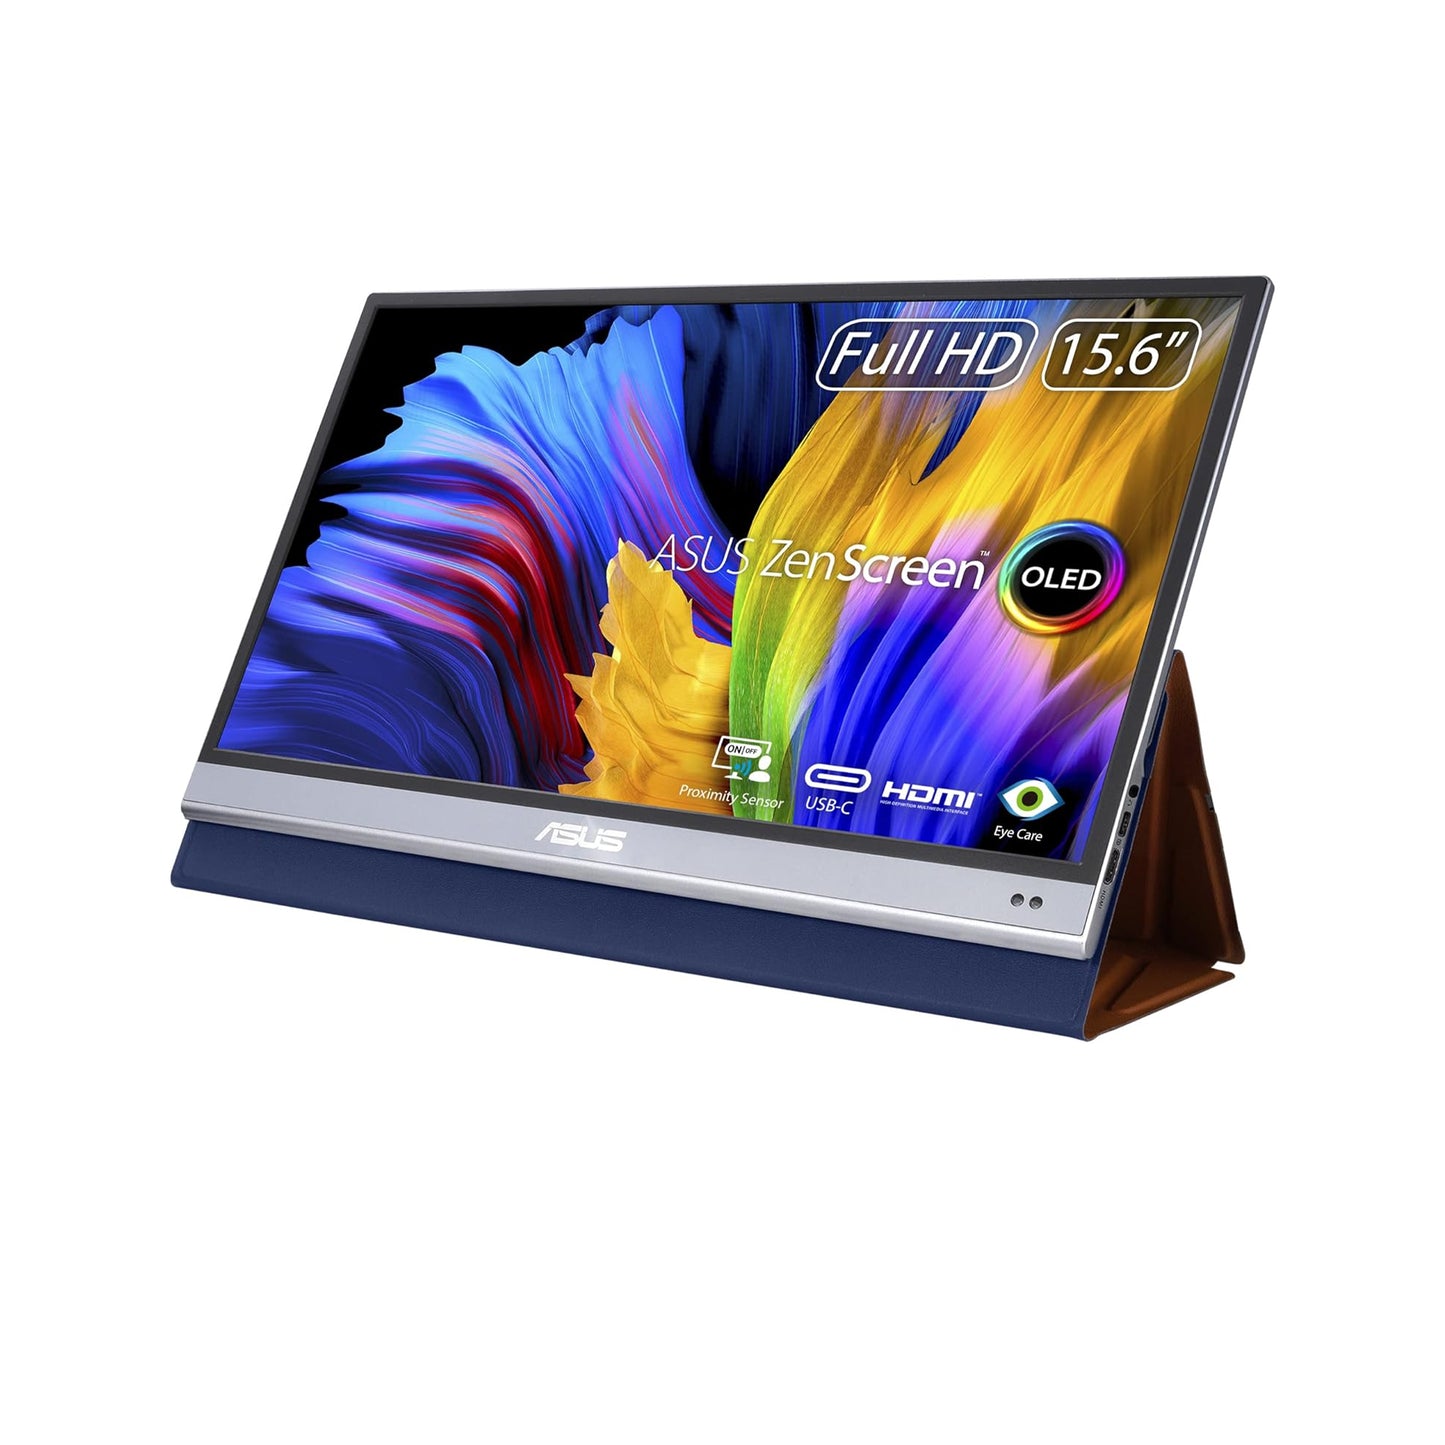 ASUS ZenScreen OLED MQ16AH 15.6" 16:9 Full HD Portable USB-C HDR Monitor